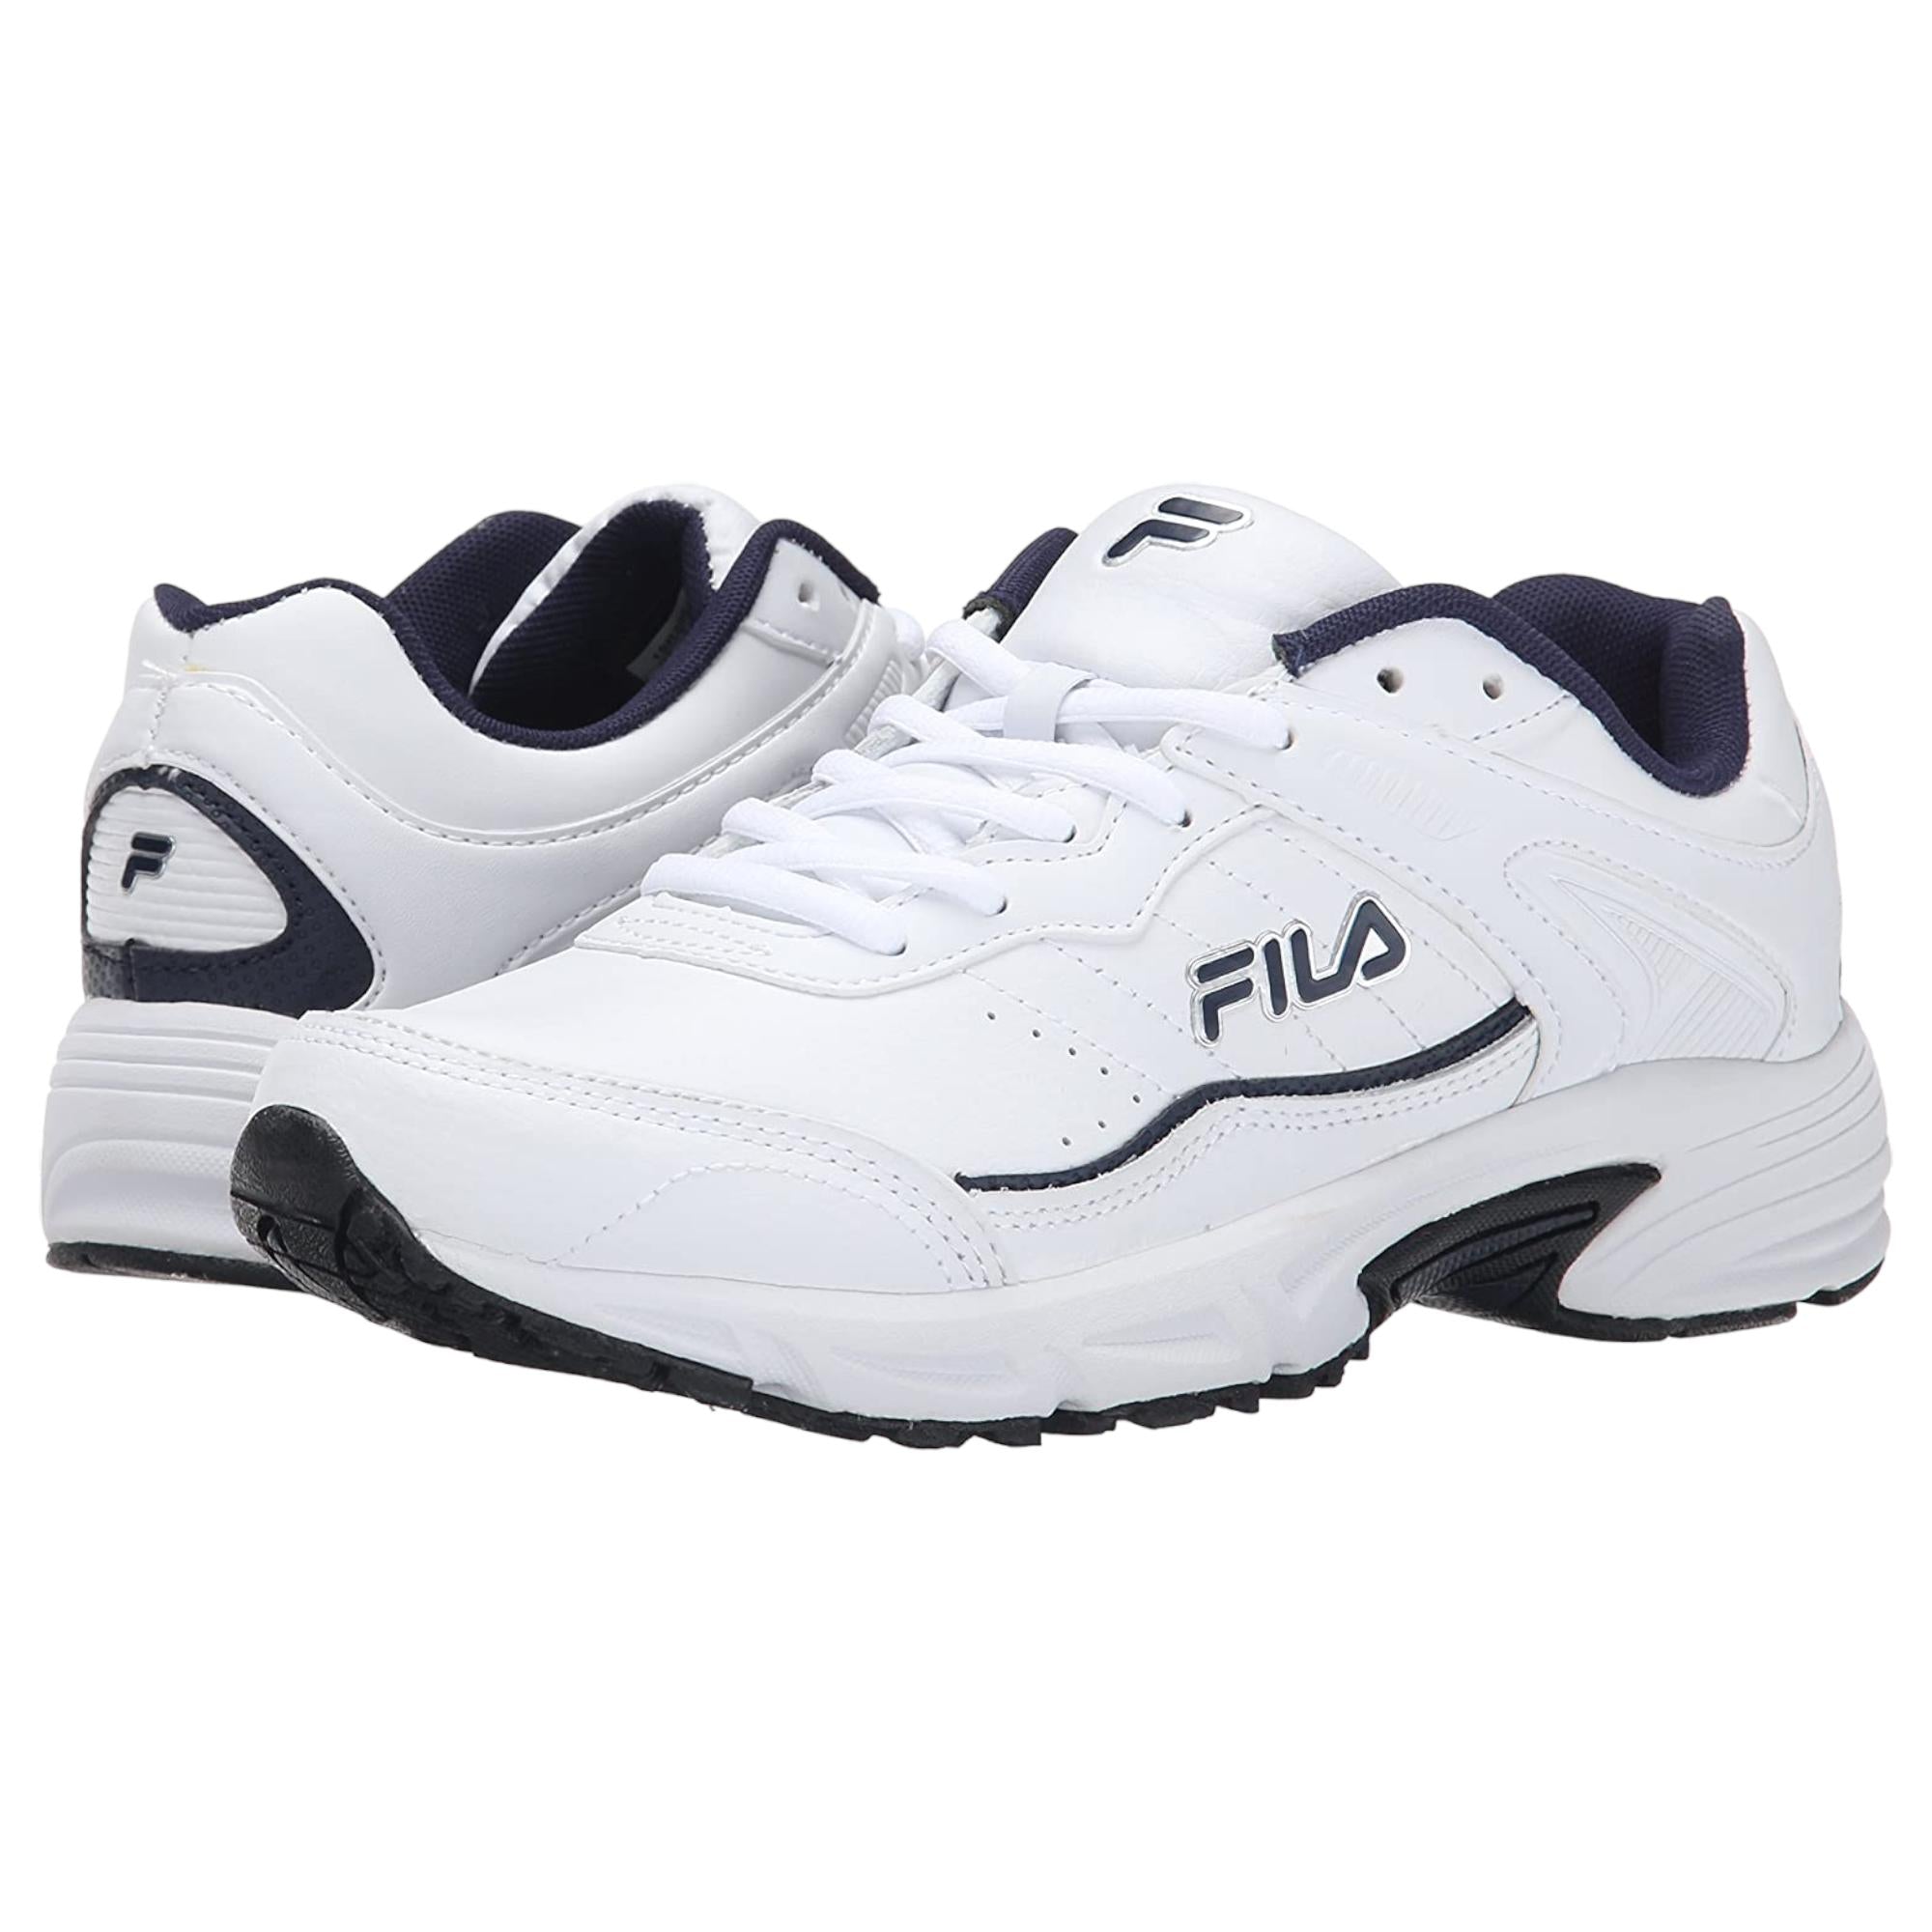 Fila Men's Memory Sportland Running Shoe - Experience Style & Comfort